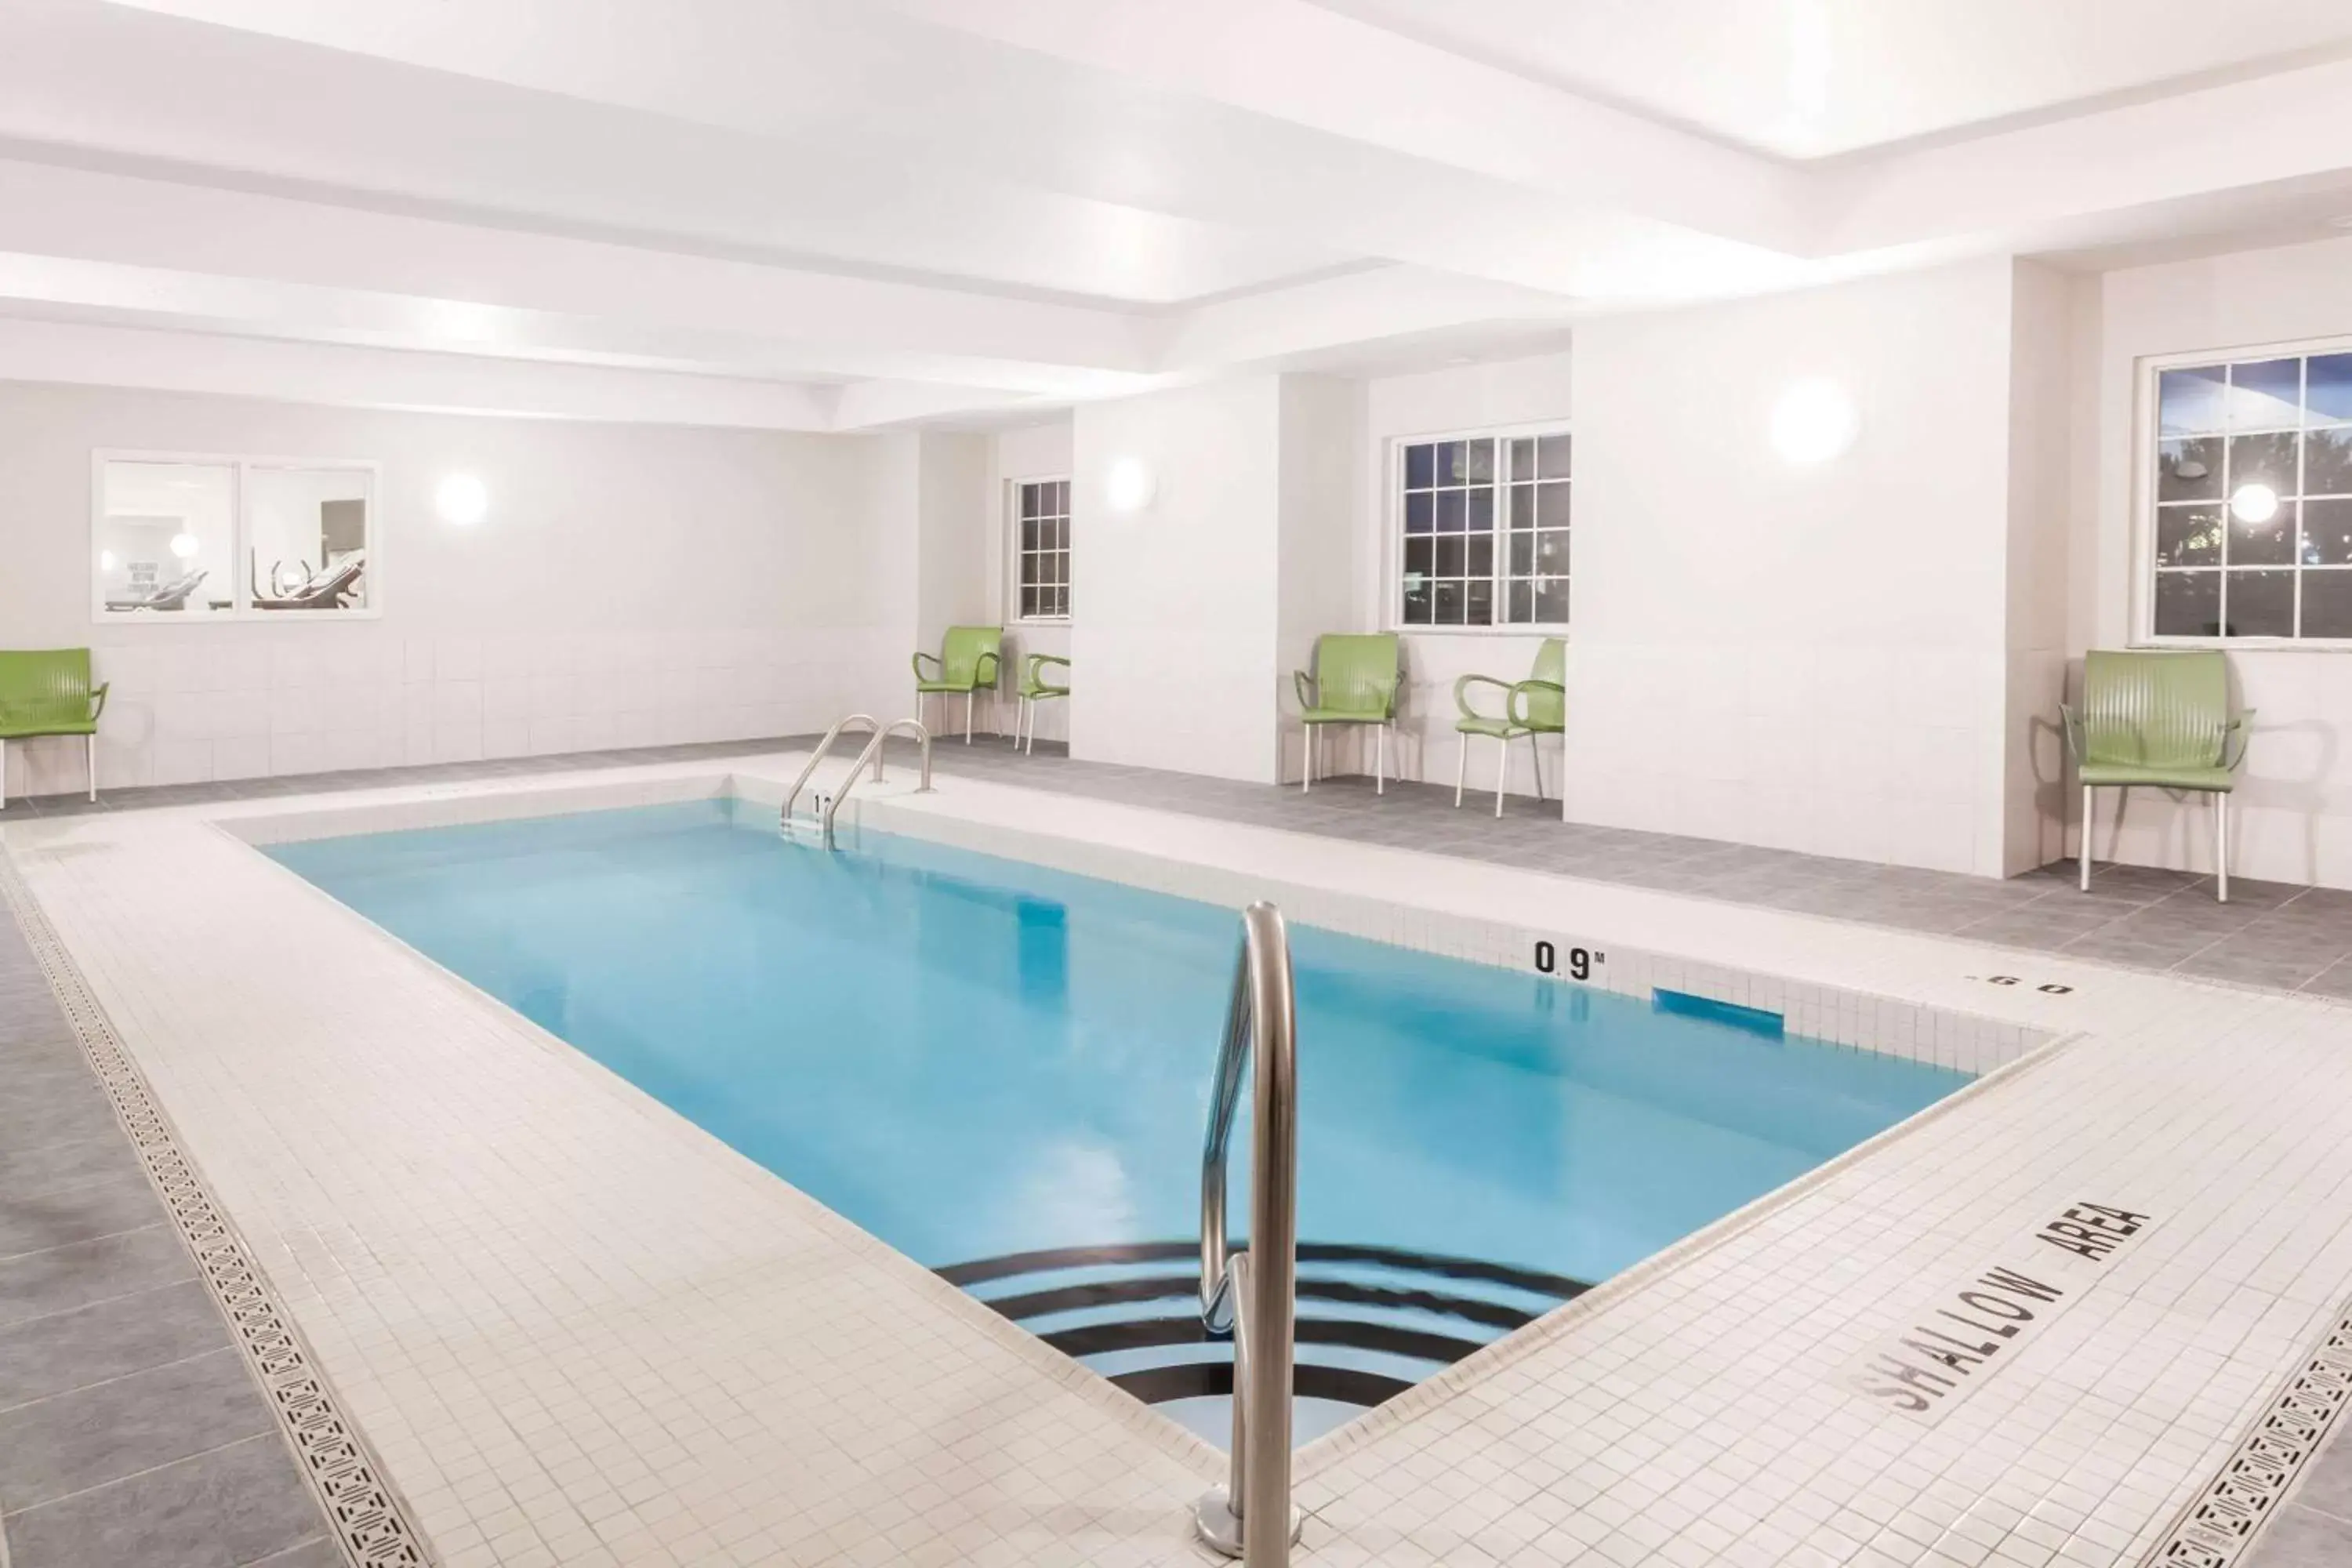 On site, Swimming Pool in Microtel Inn & Suites Sault Ste. Marie